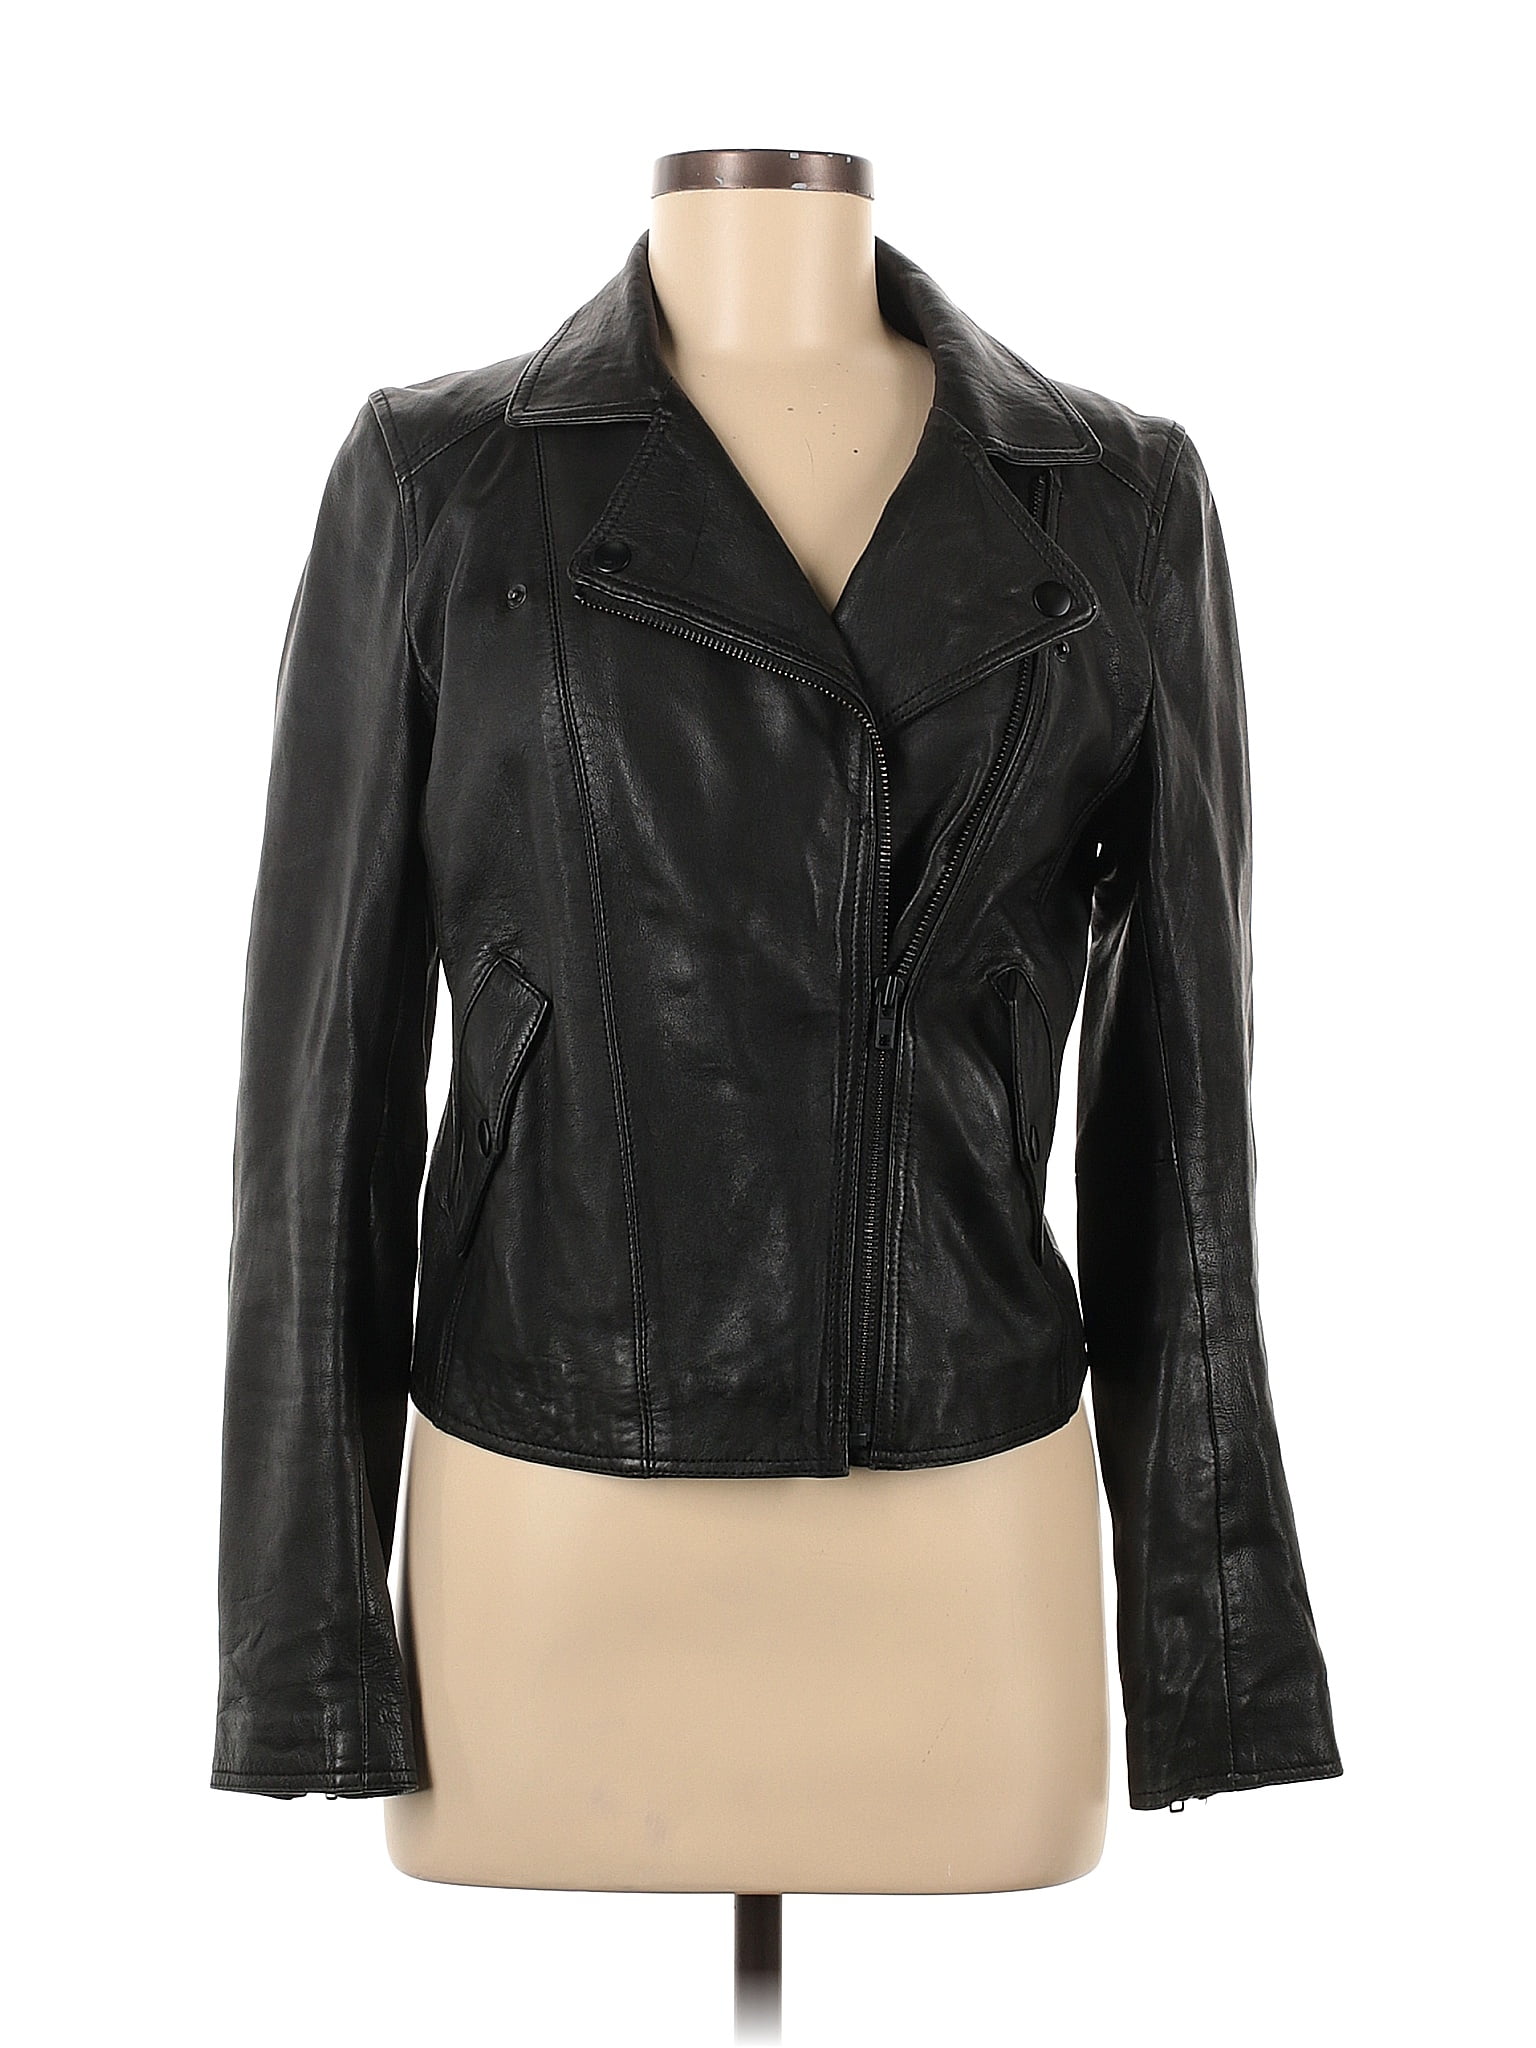 Madewell 100% Leather Black Leather Jacket Size M - 67% off | ThredUp